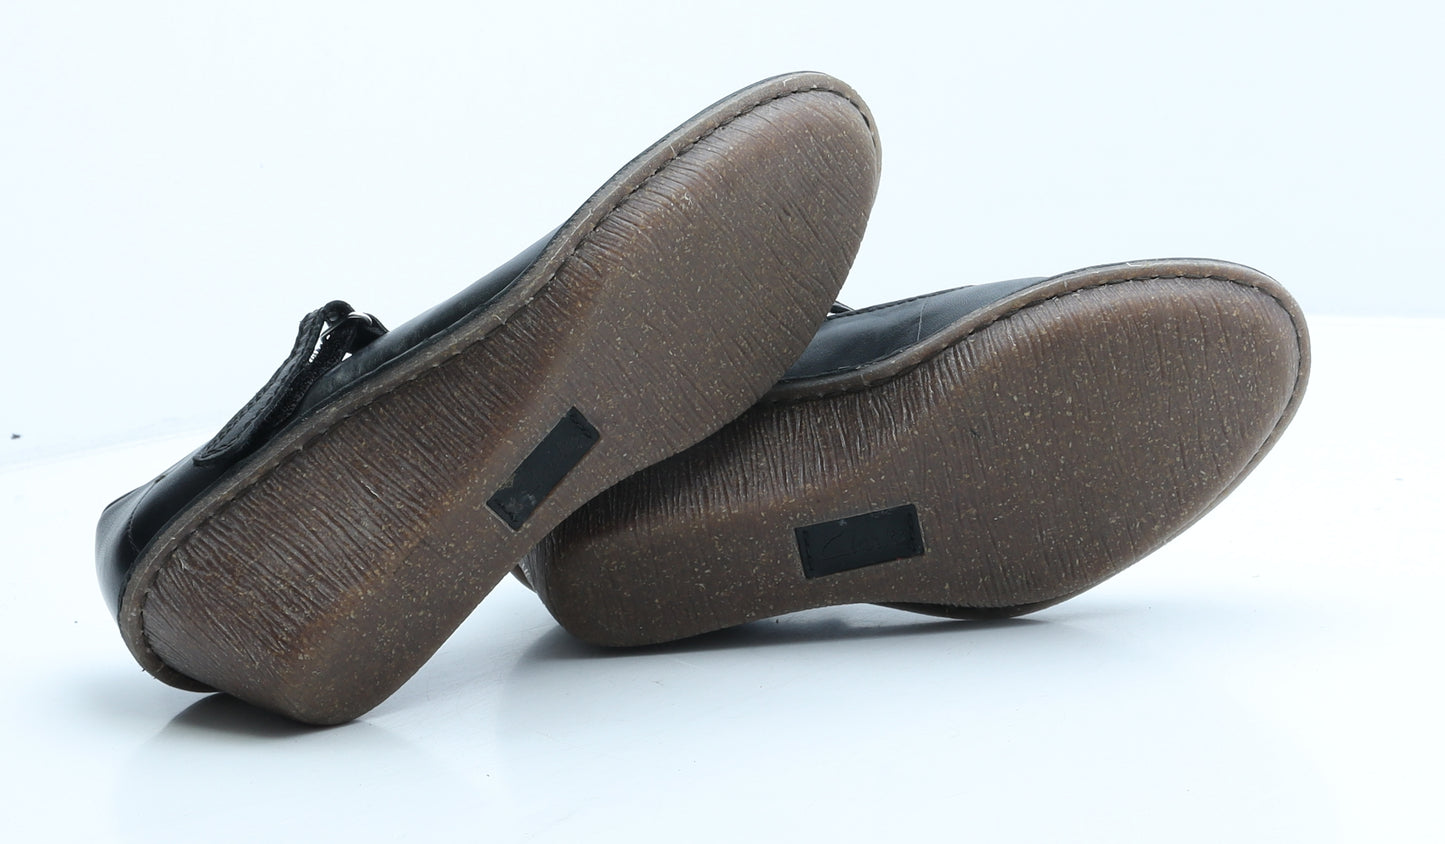 Clarks Womens Black Leather Platform Heel UK 6 39.5